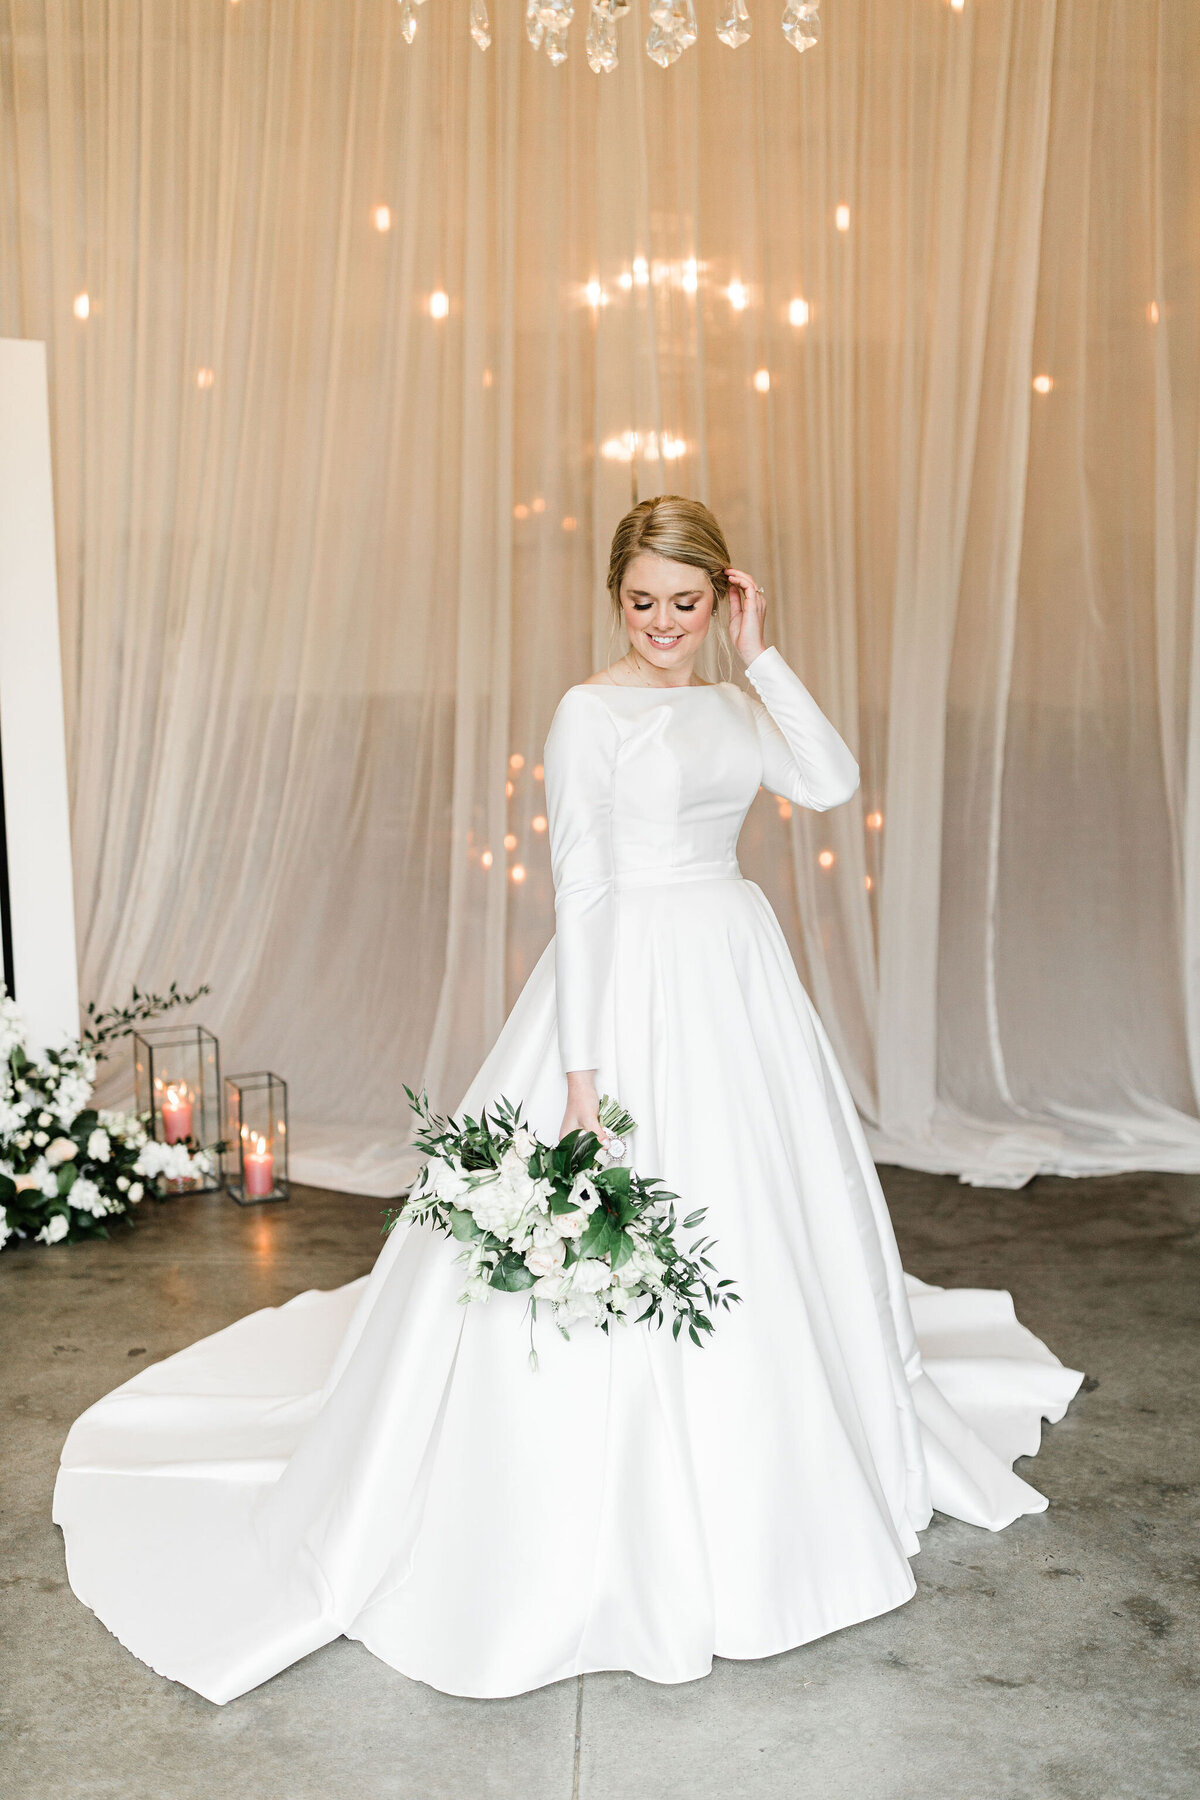 Stunning Bridal photos at Wrightsville Manor NC.